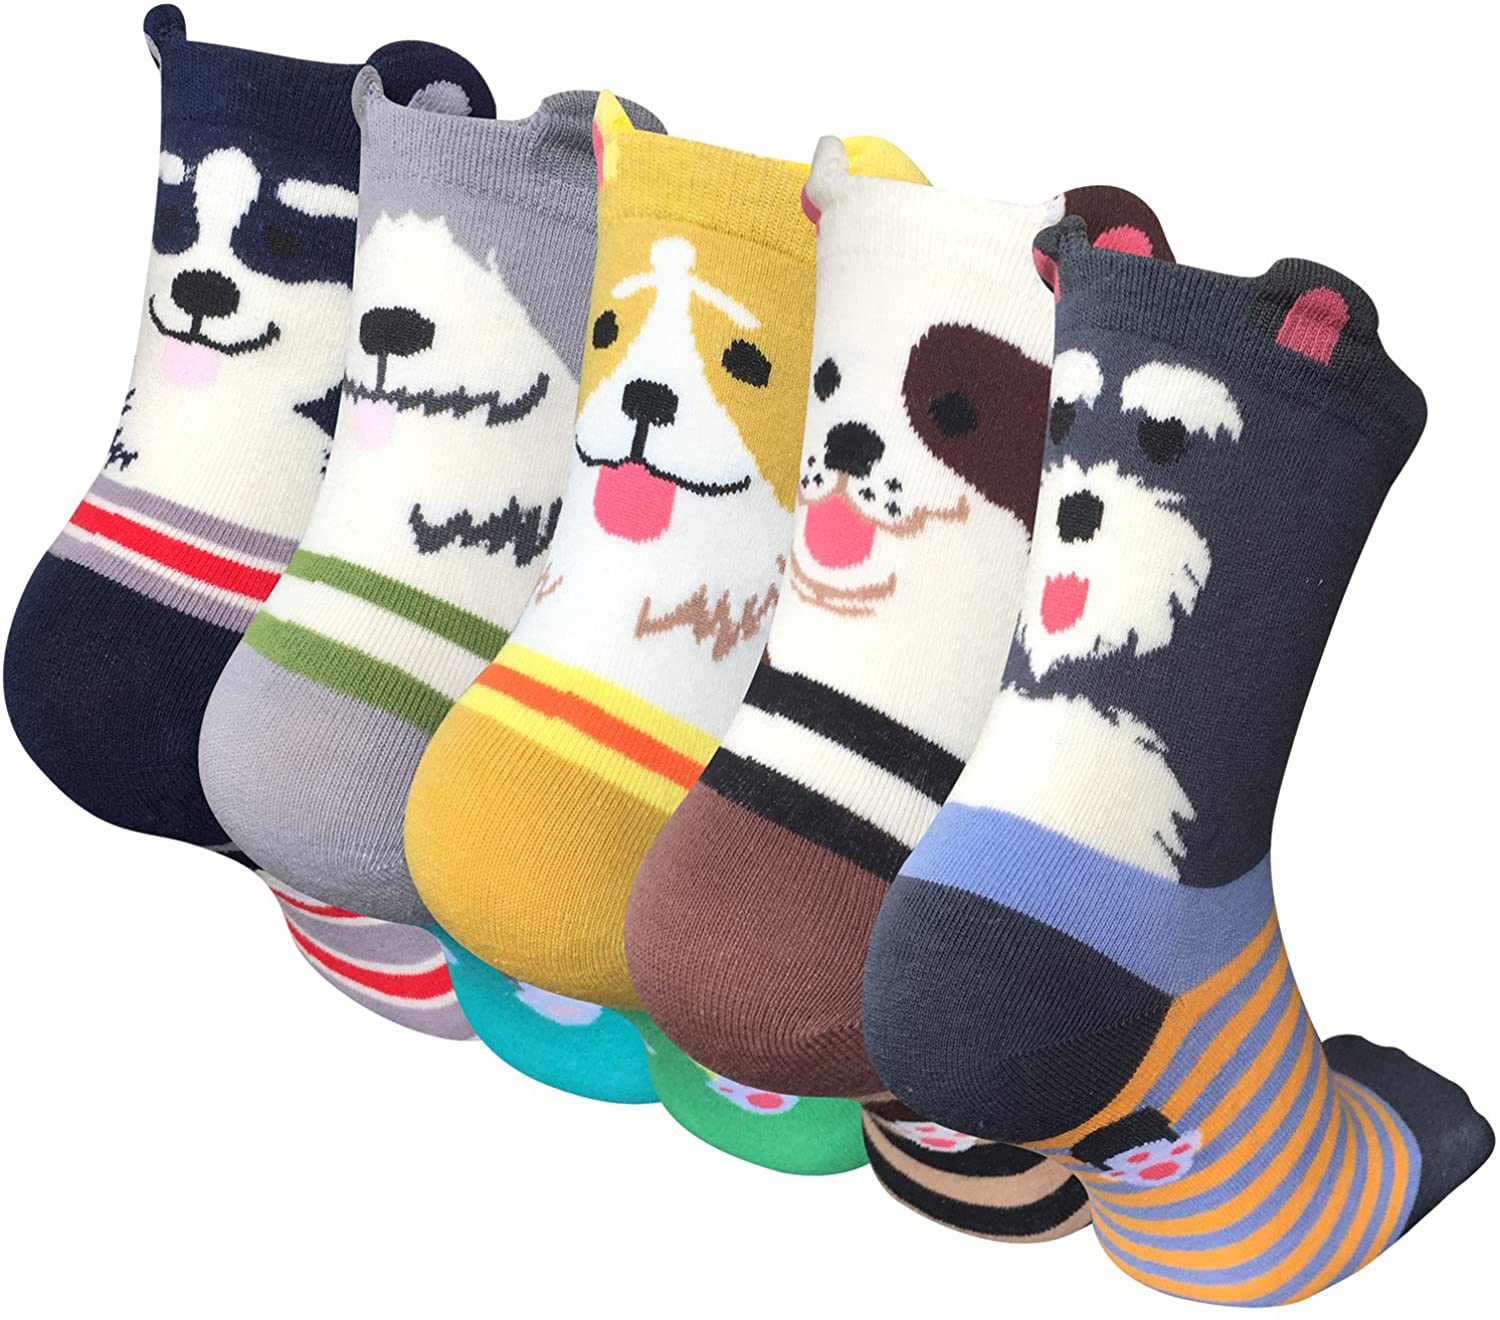 YSense Women’s Humorous Dog Socks, 5-Pair